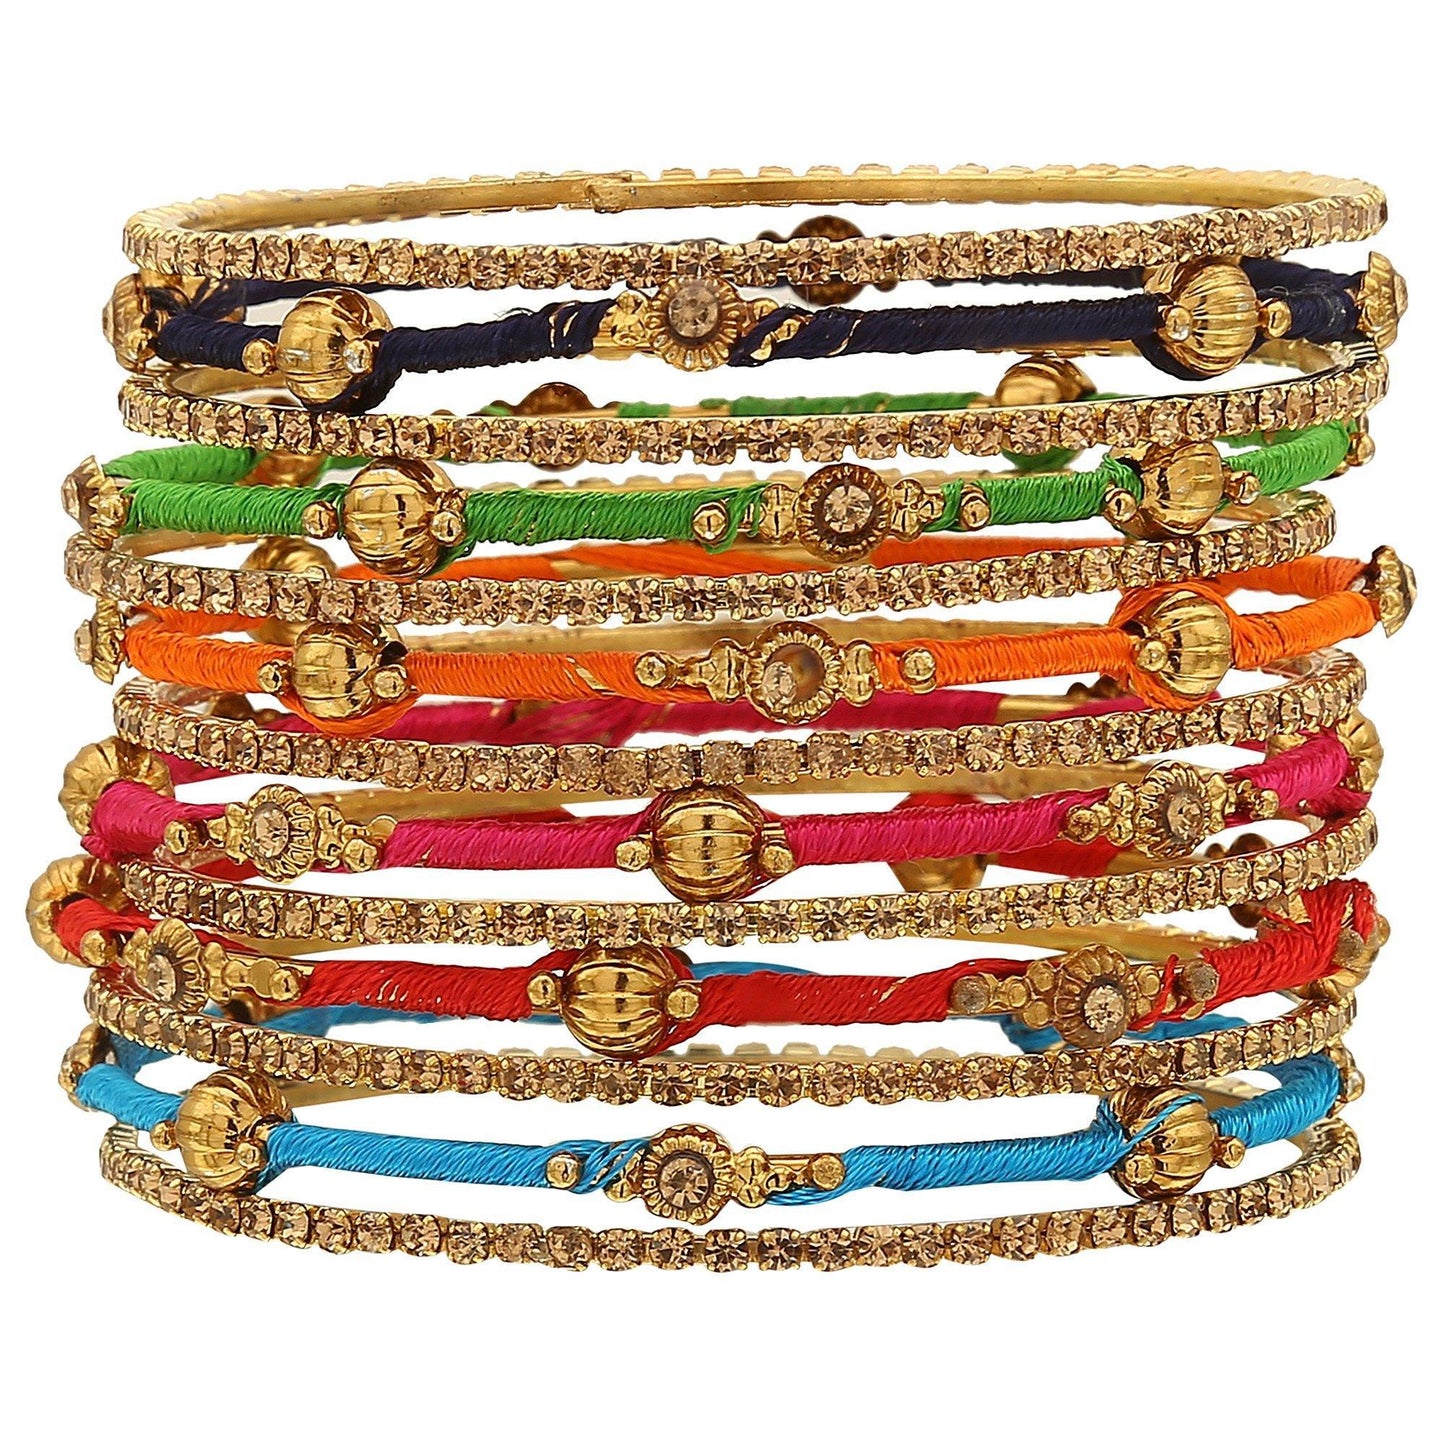 sukriti designer bollywood stylish silk thread metal bracelet bangles for girls & women - set of 13